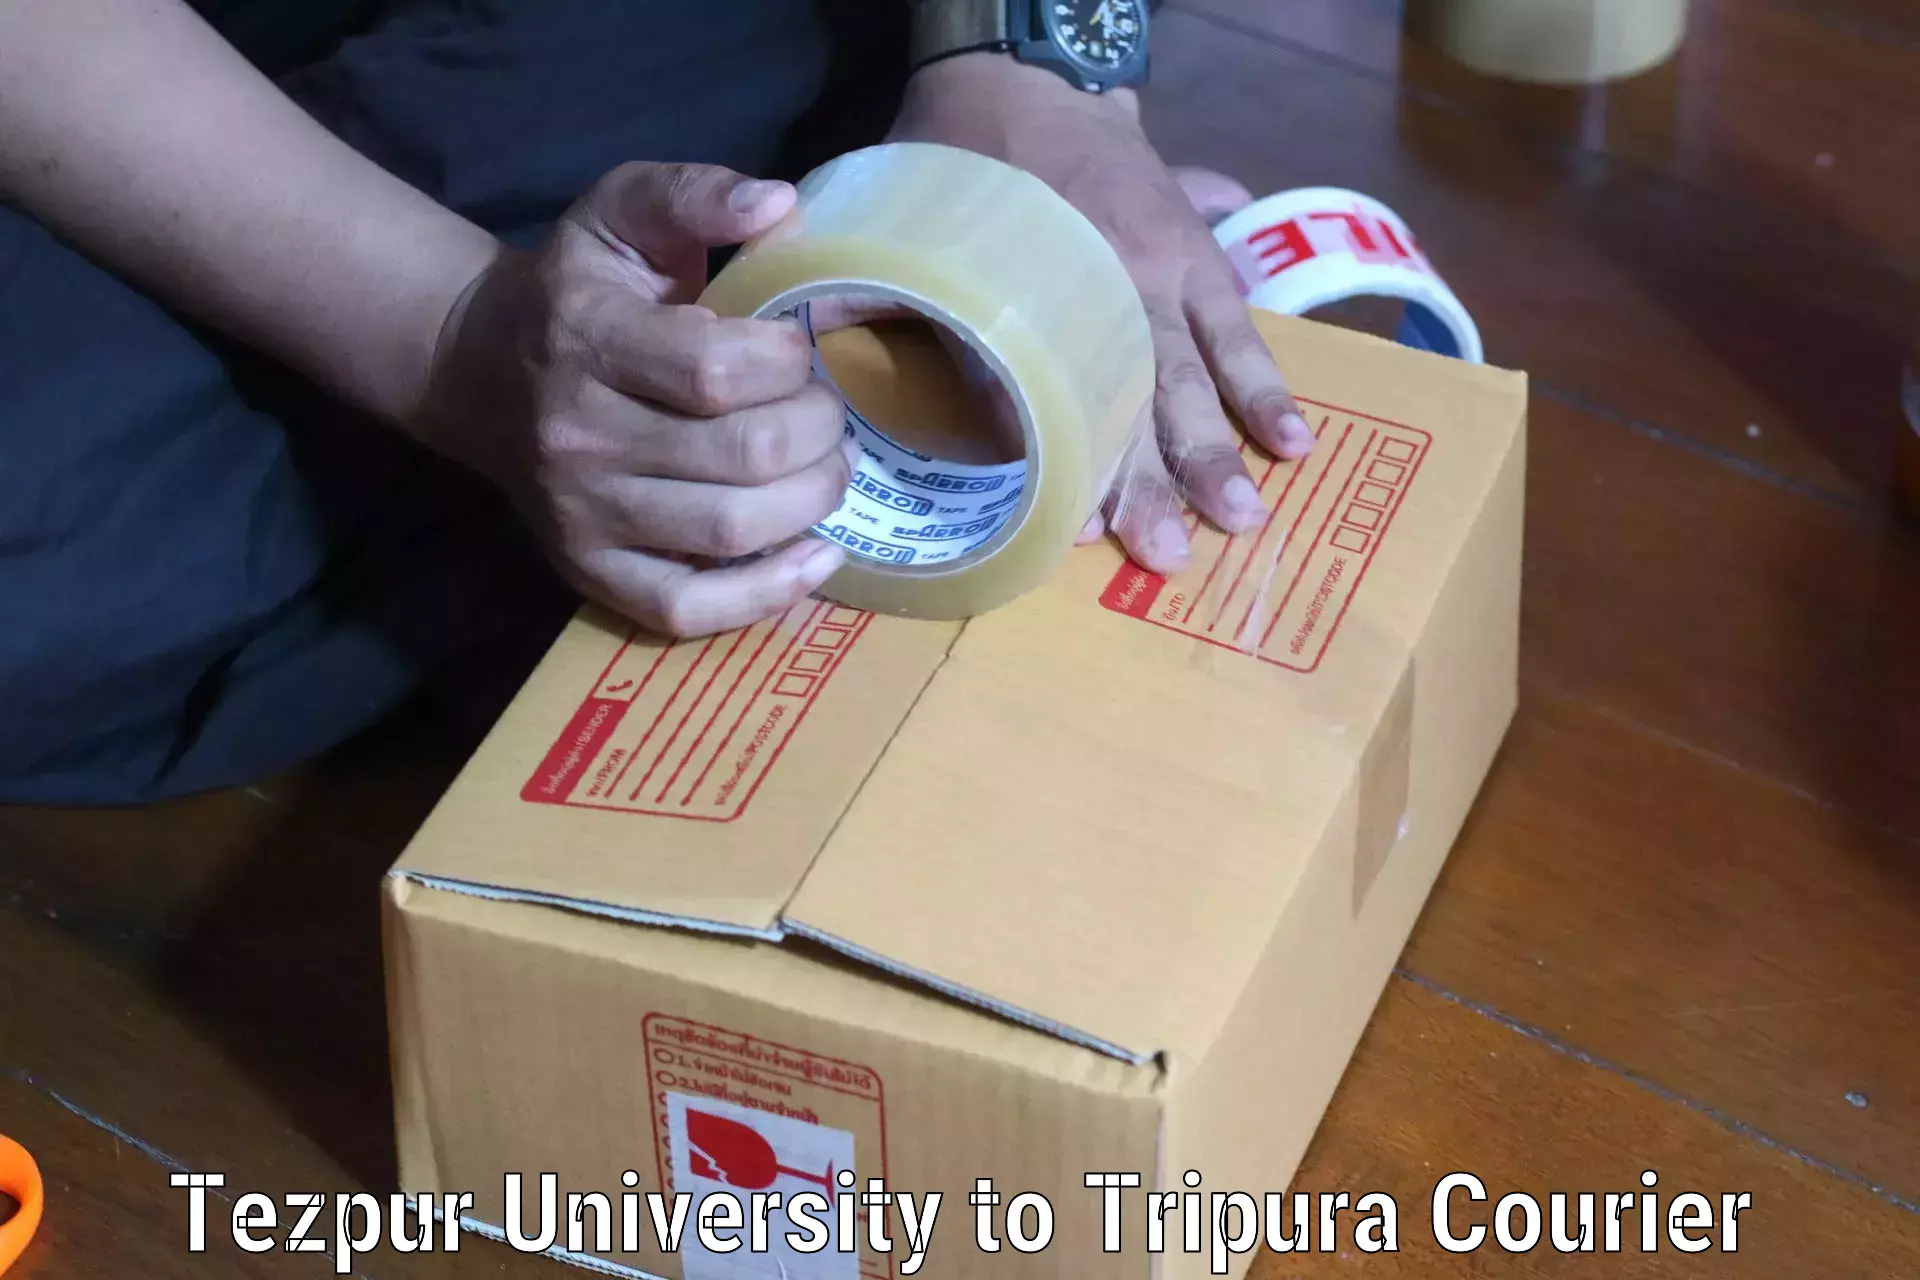 Professional courier services Tezpur University to Udaipur Tripura